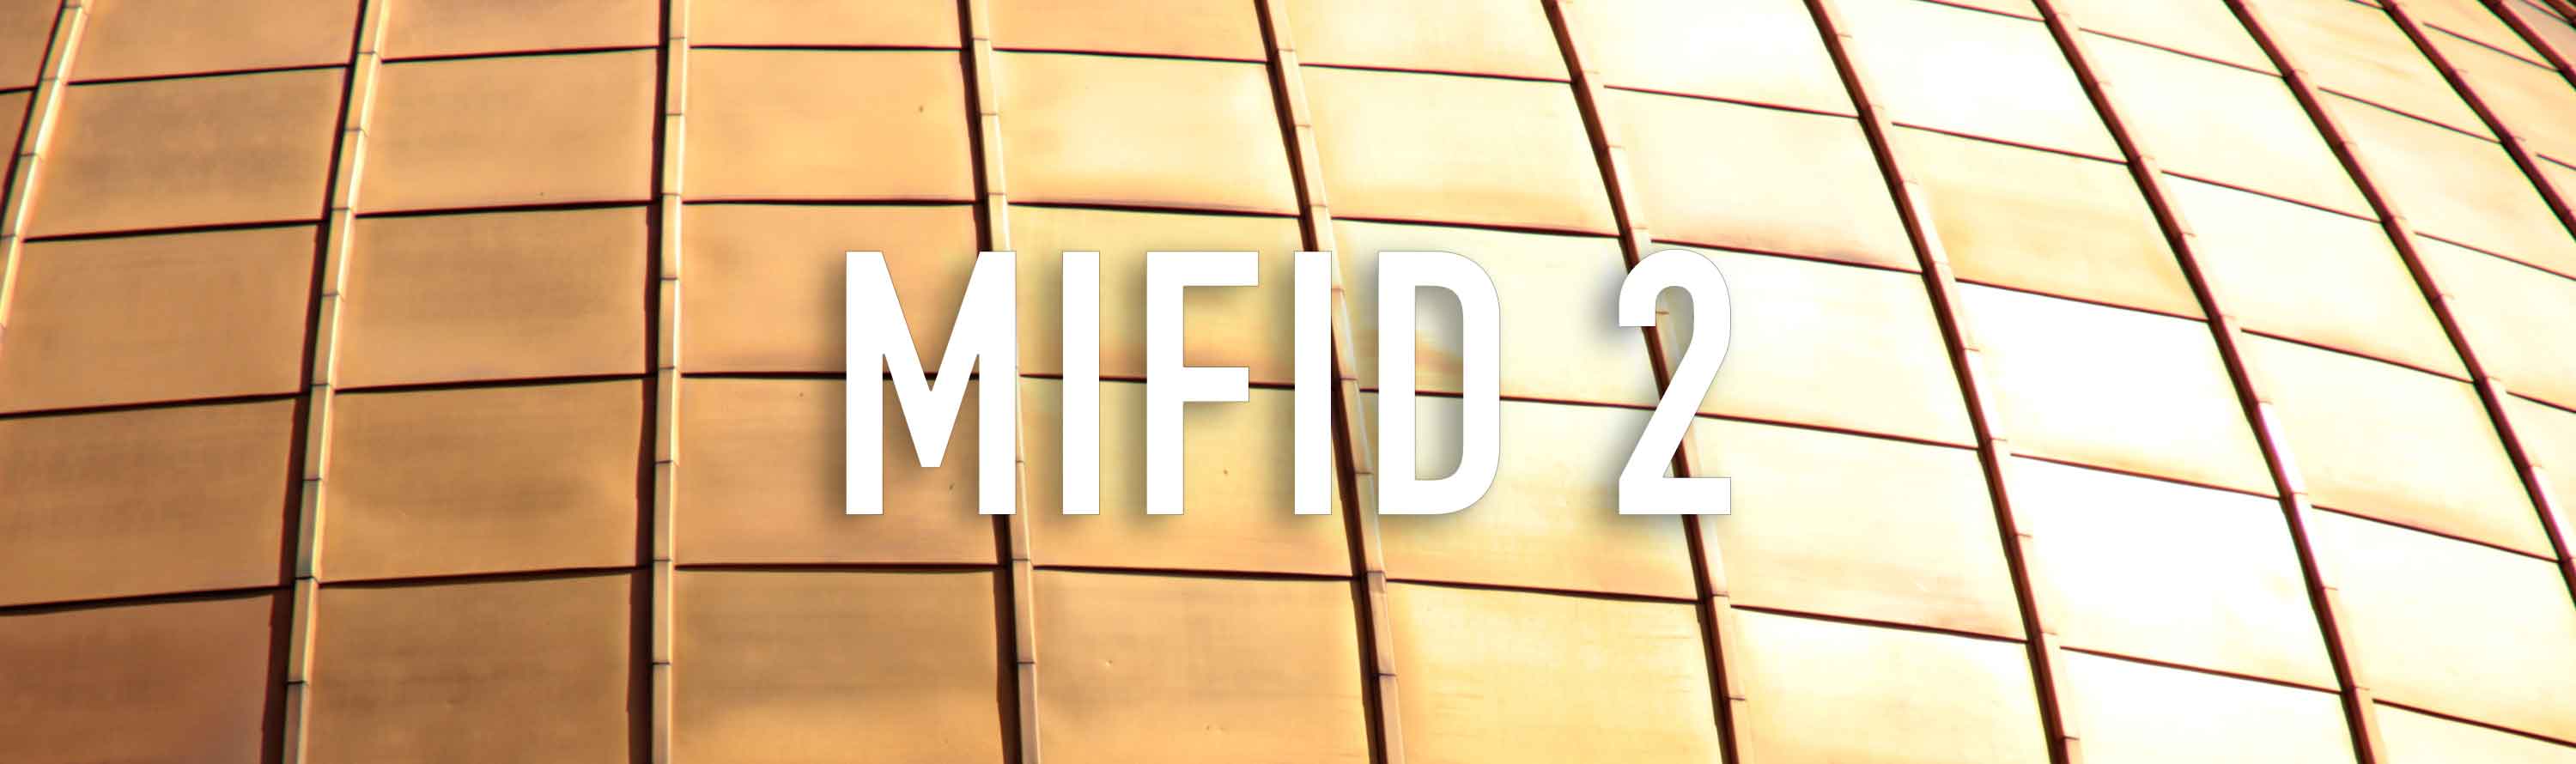 MiFID 2